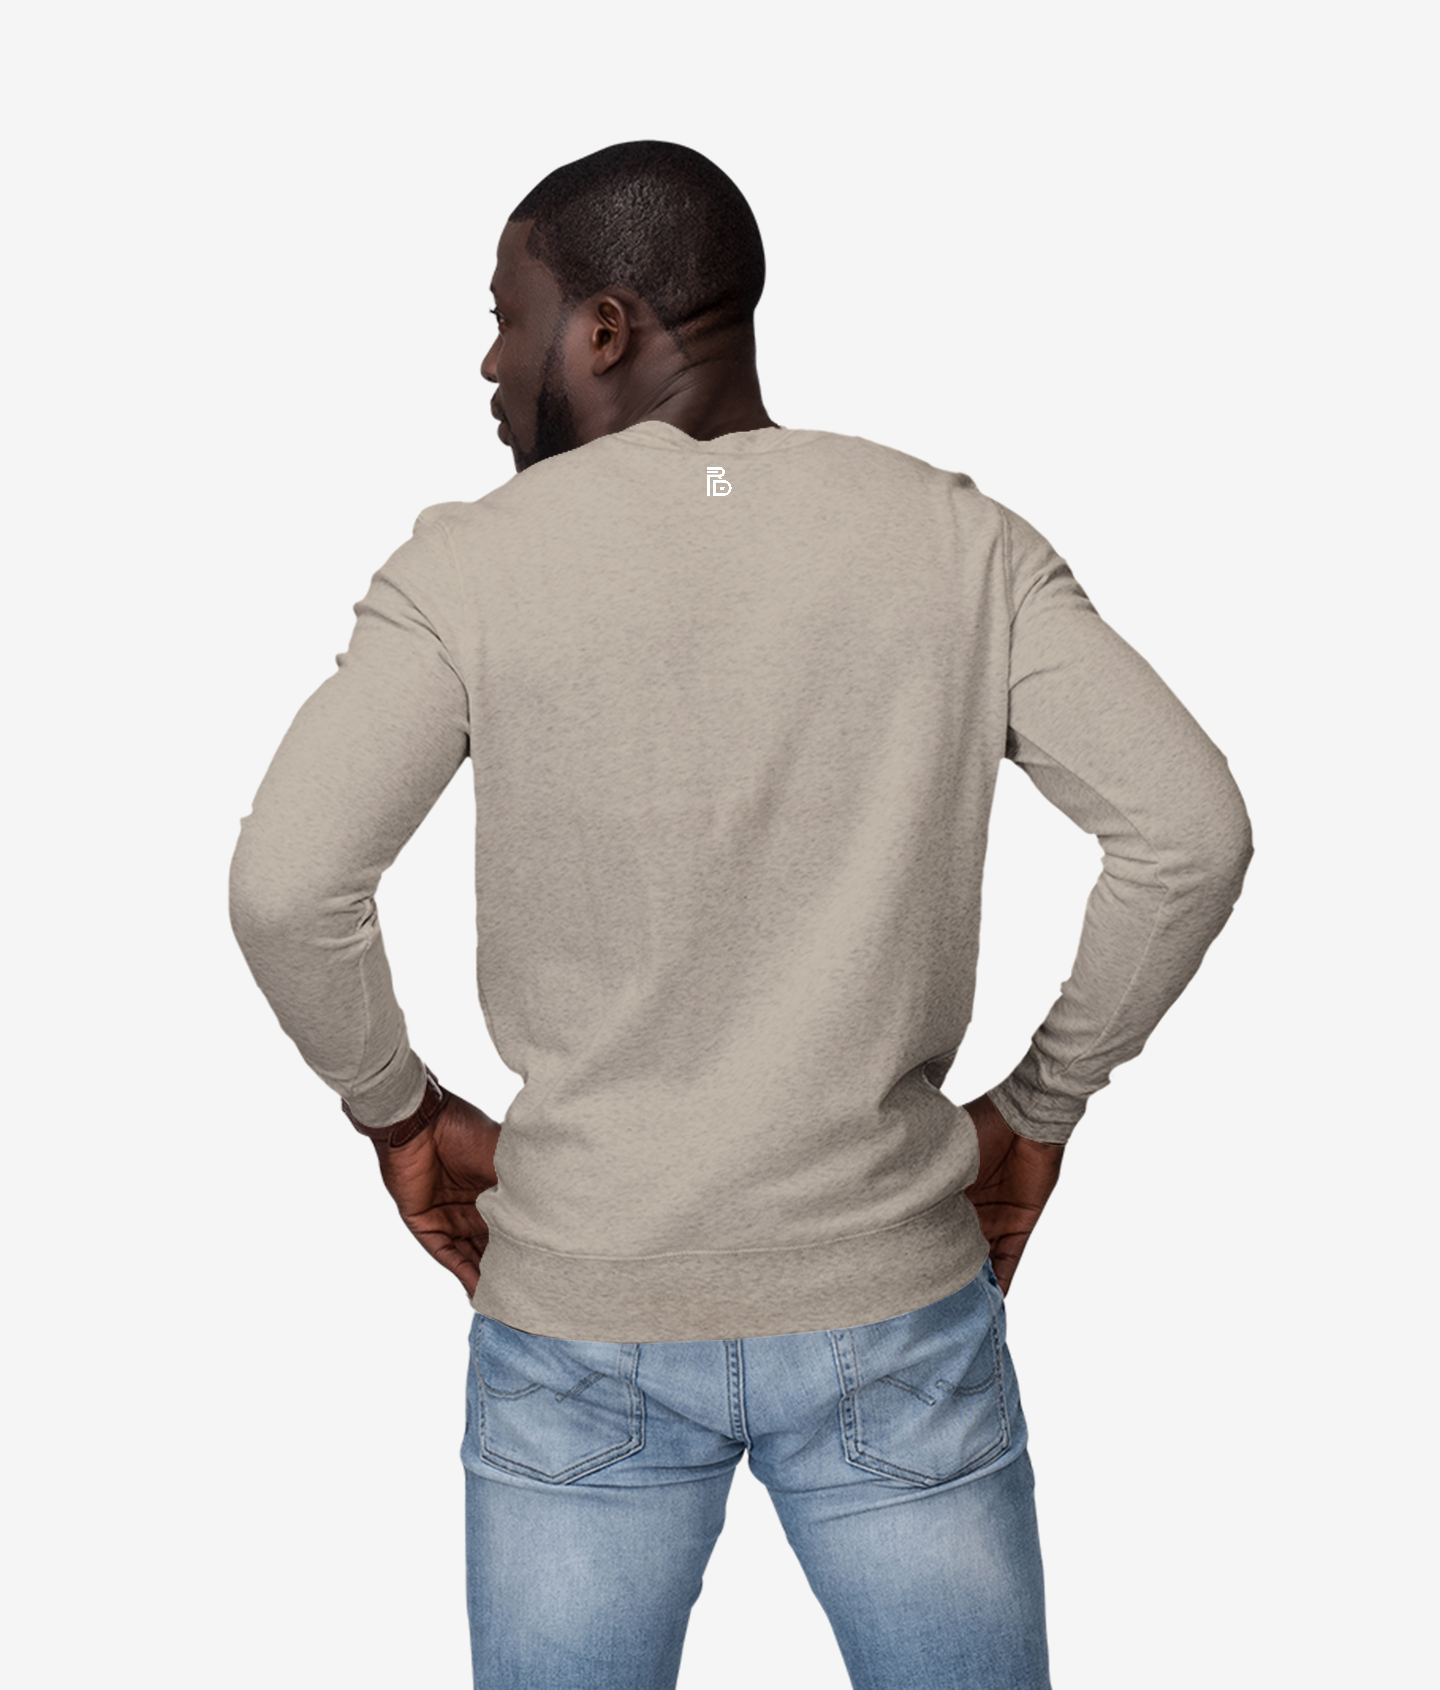 Freetown Sweater